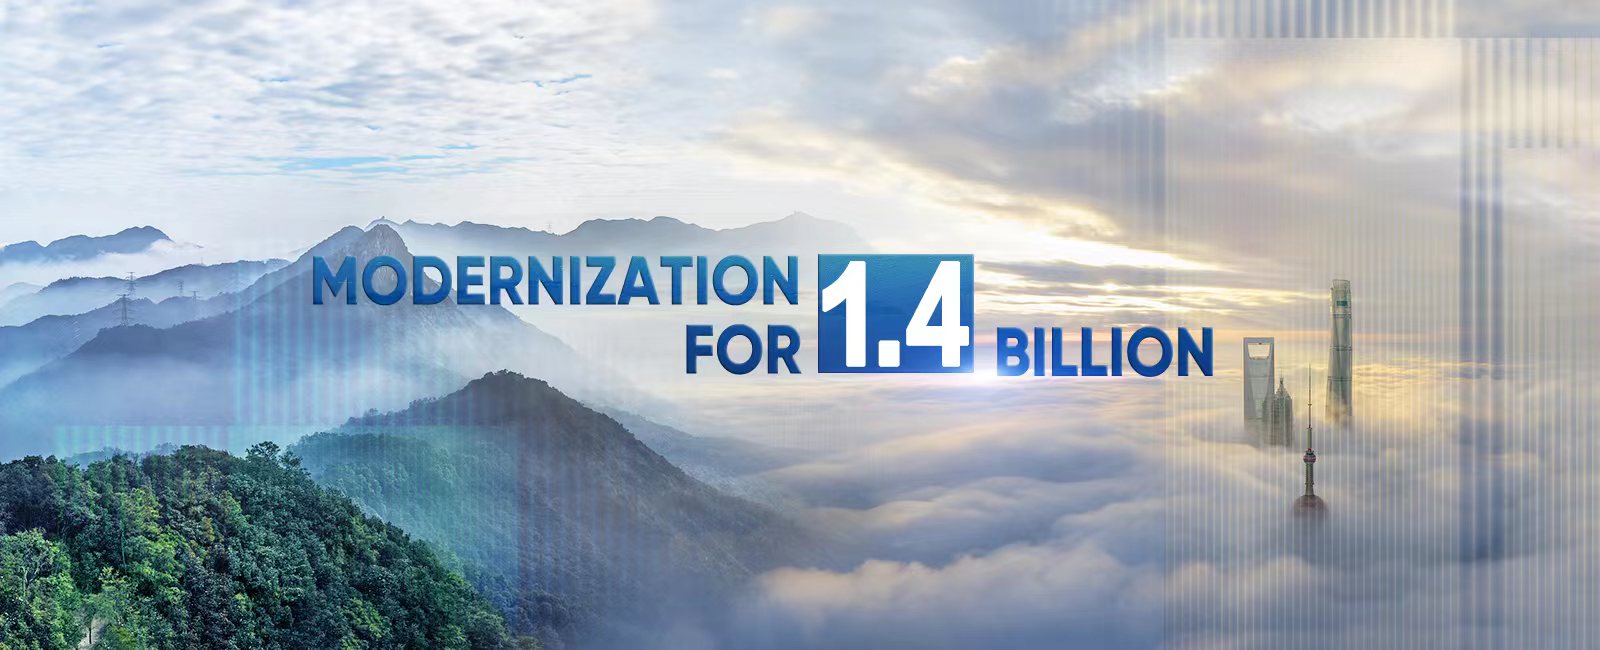 Modernization for 1.4 billion